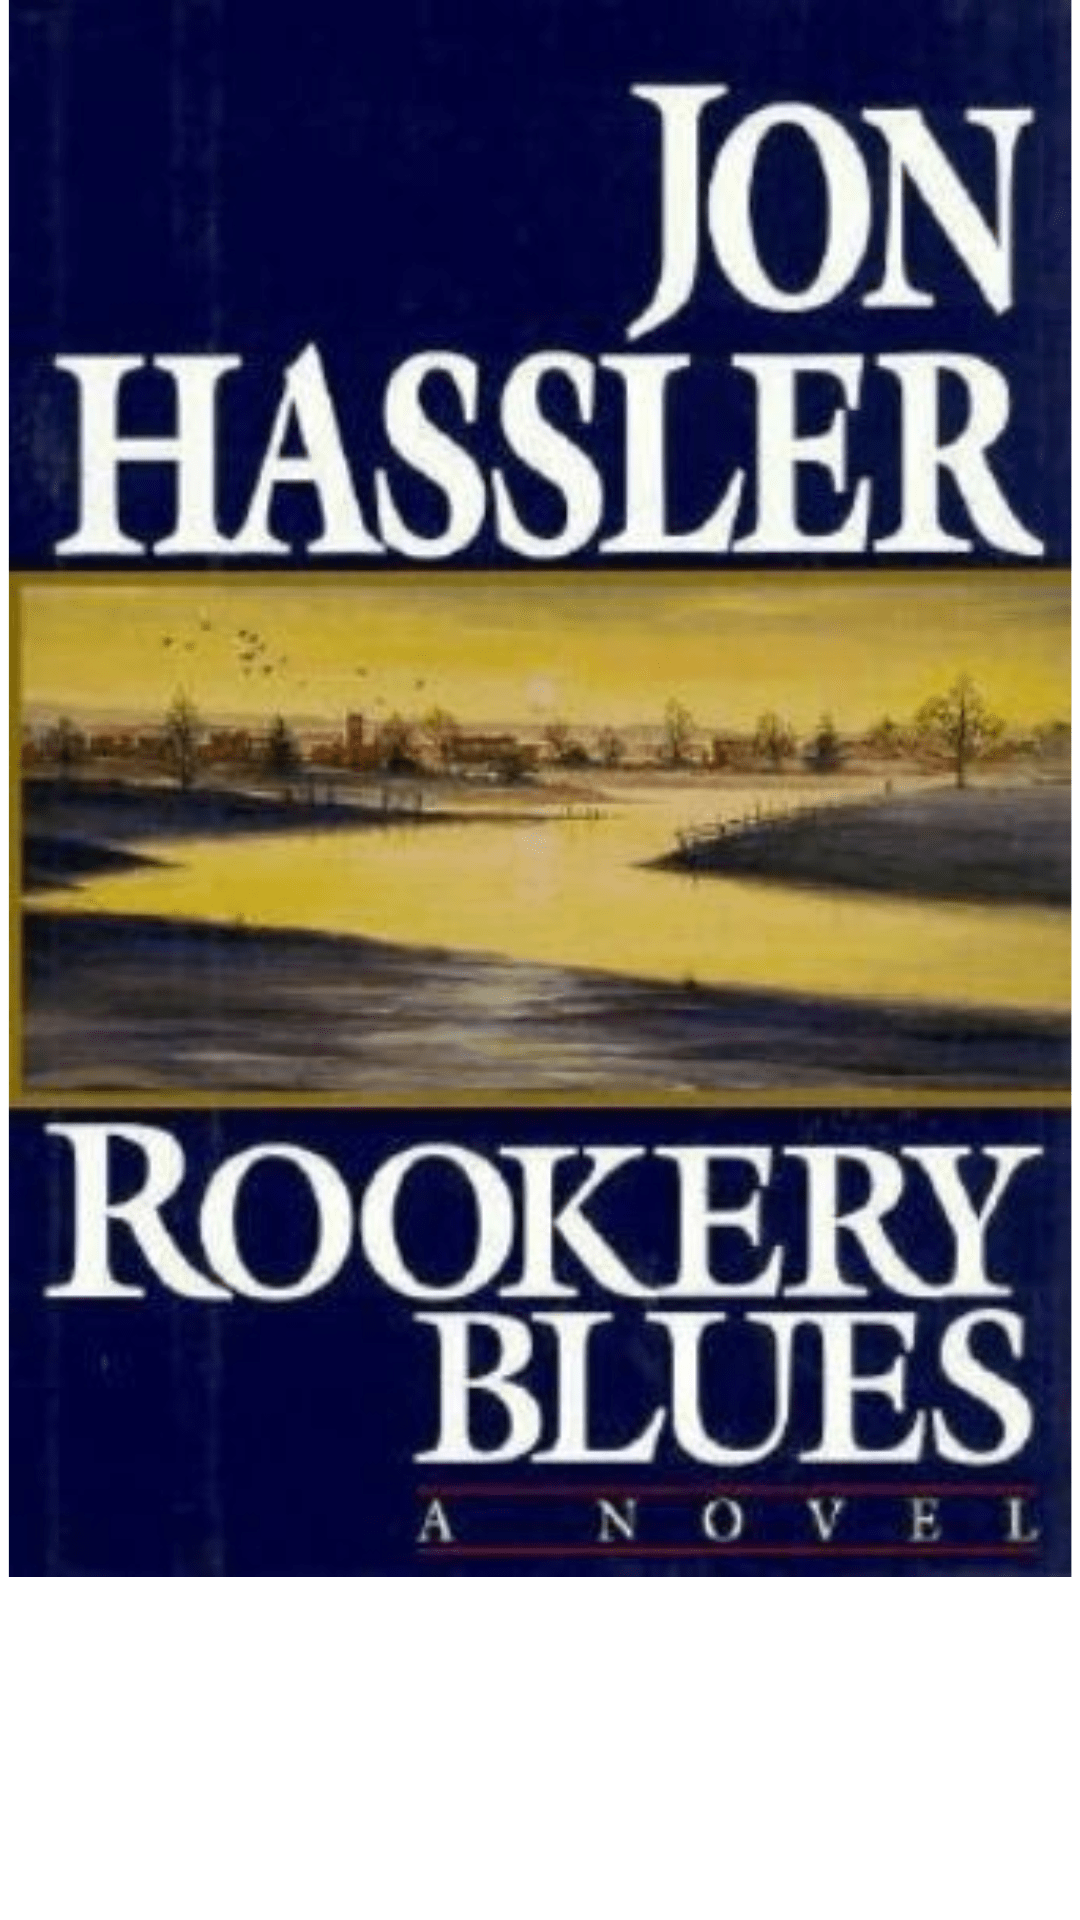 Rookery Blues by Jon Hassler